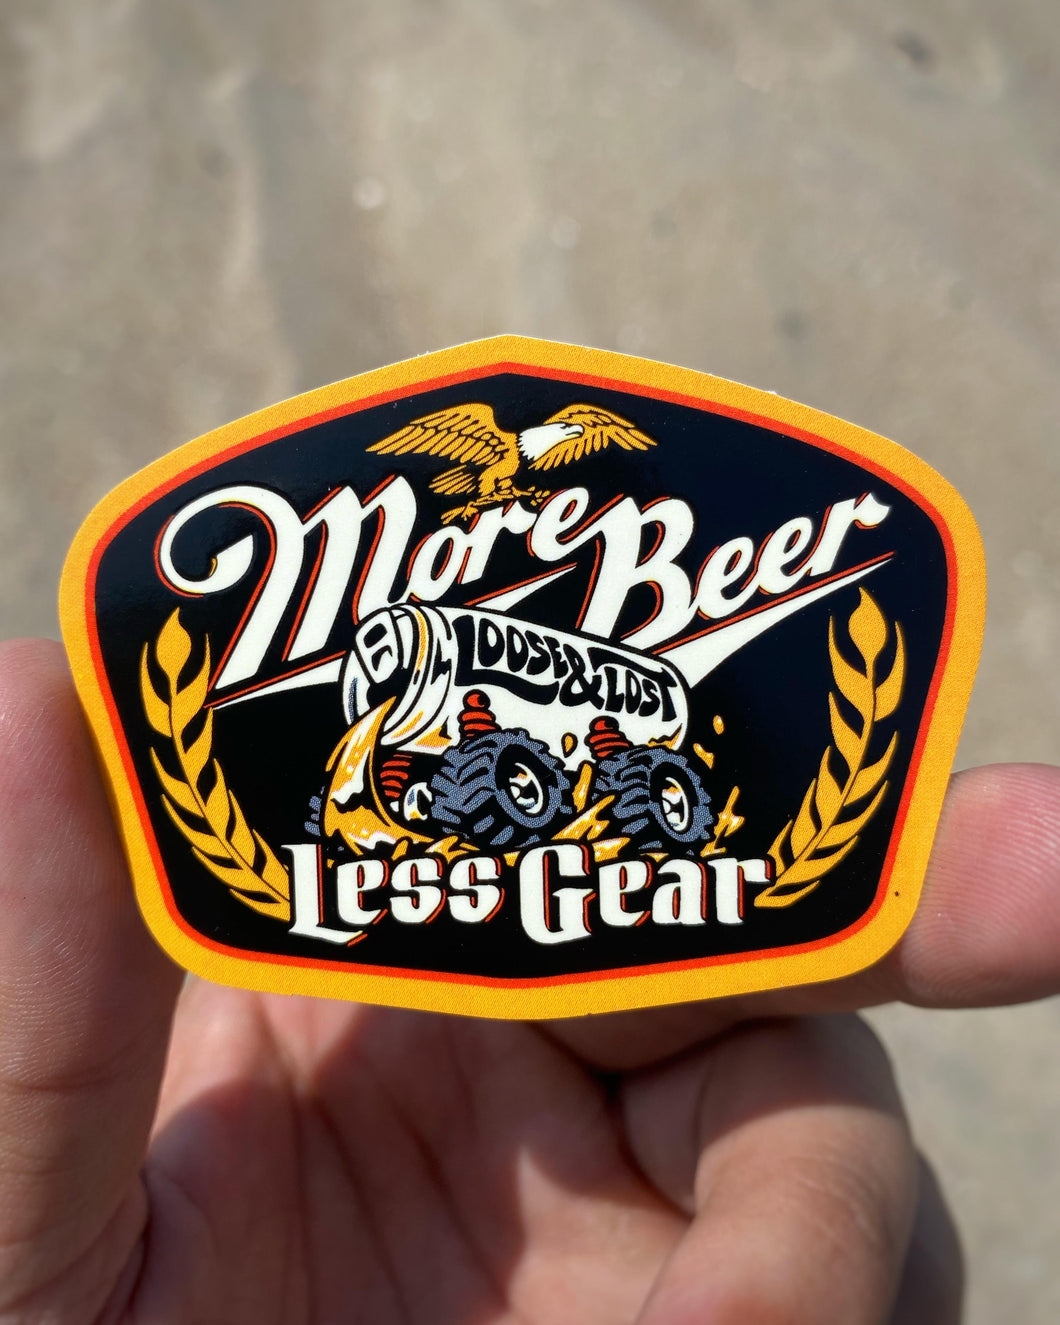 More Beer sticker